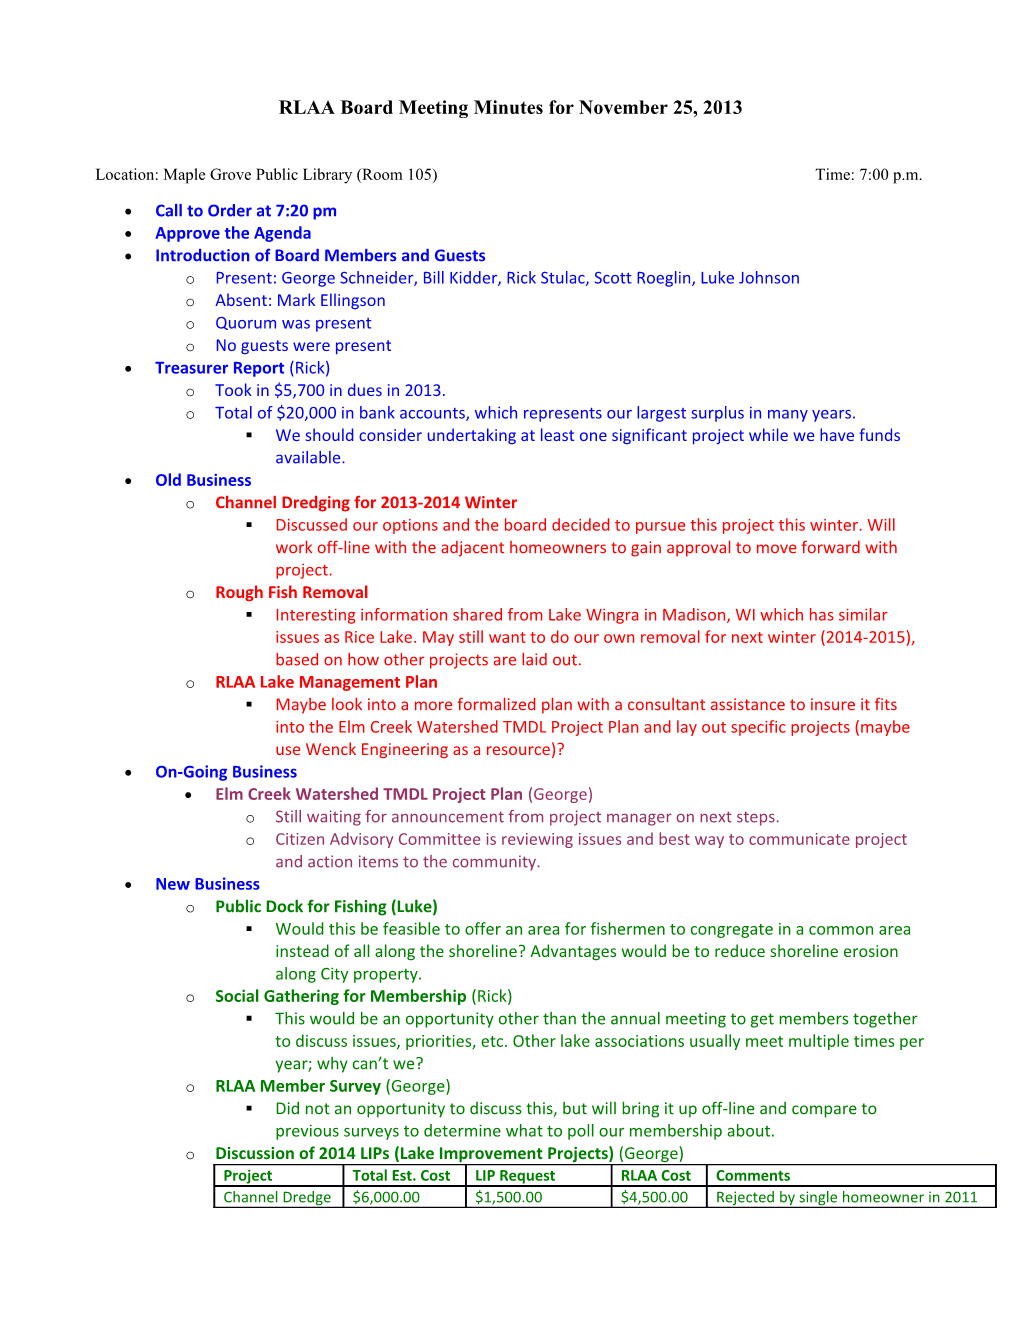 RLAA Board Meeting - Possible Agenda Items for November 2009 Meeting